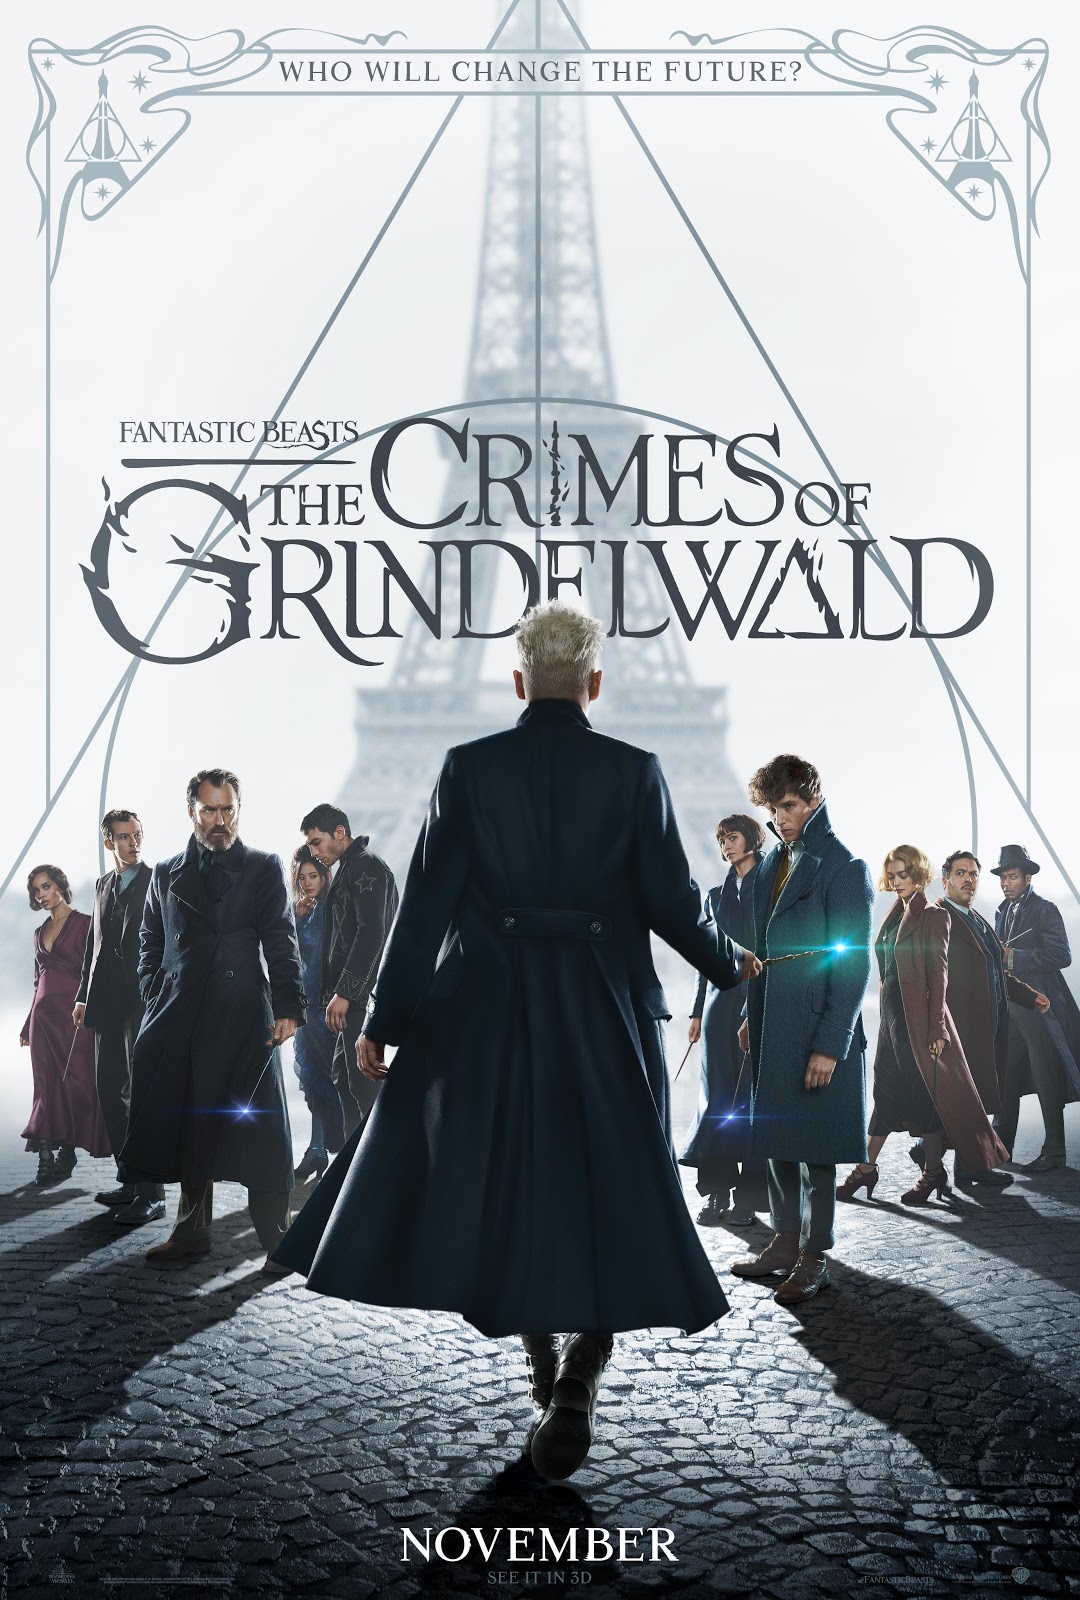 Fantastic Beasts The Crimes of Grindelwald poster